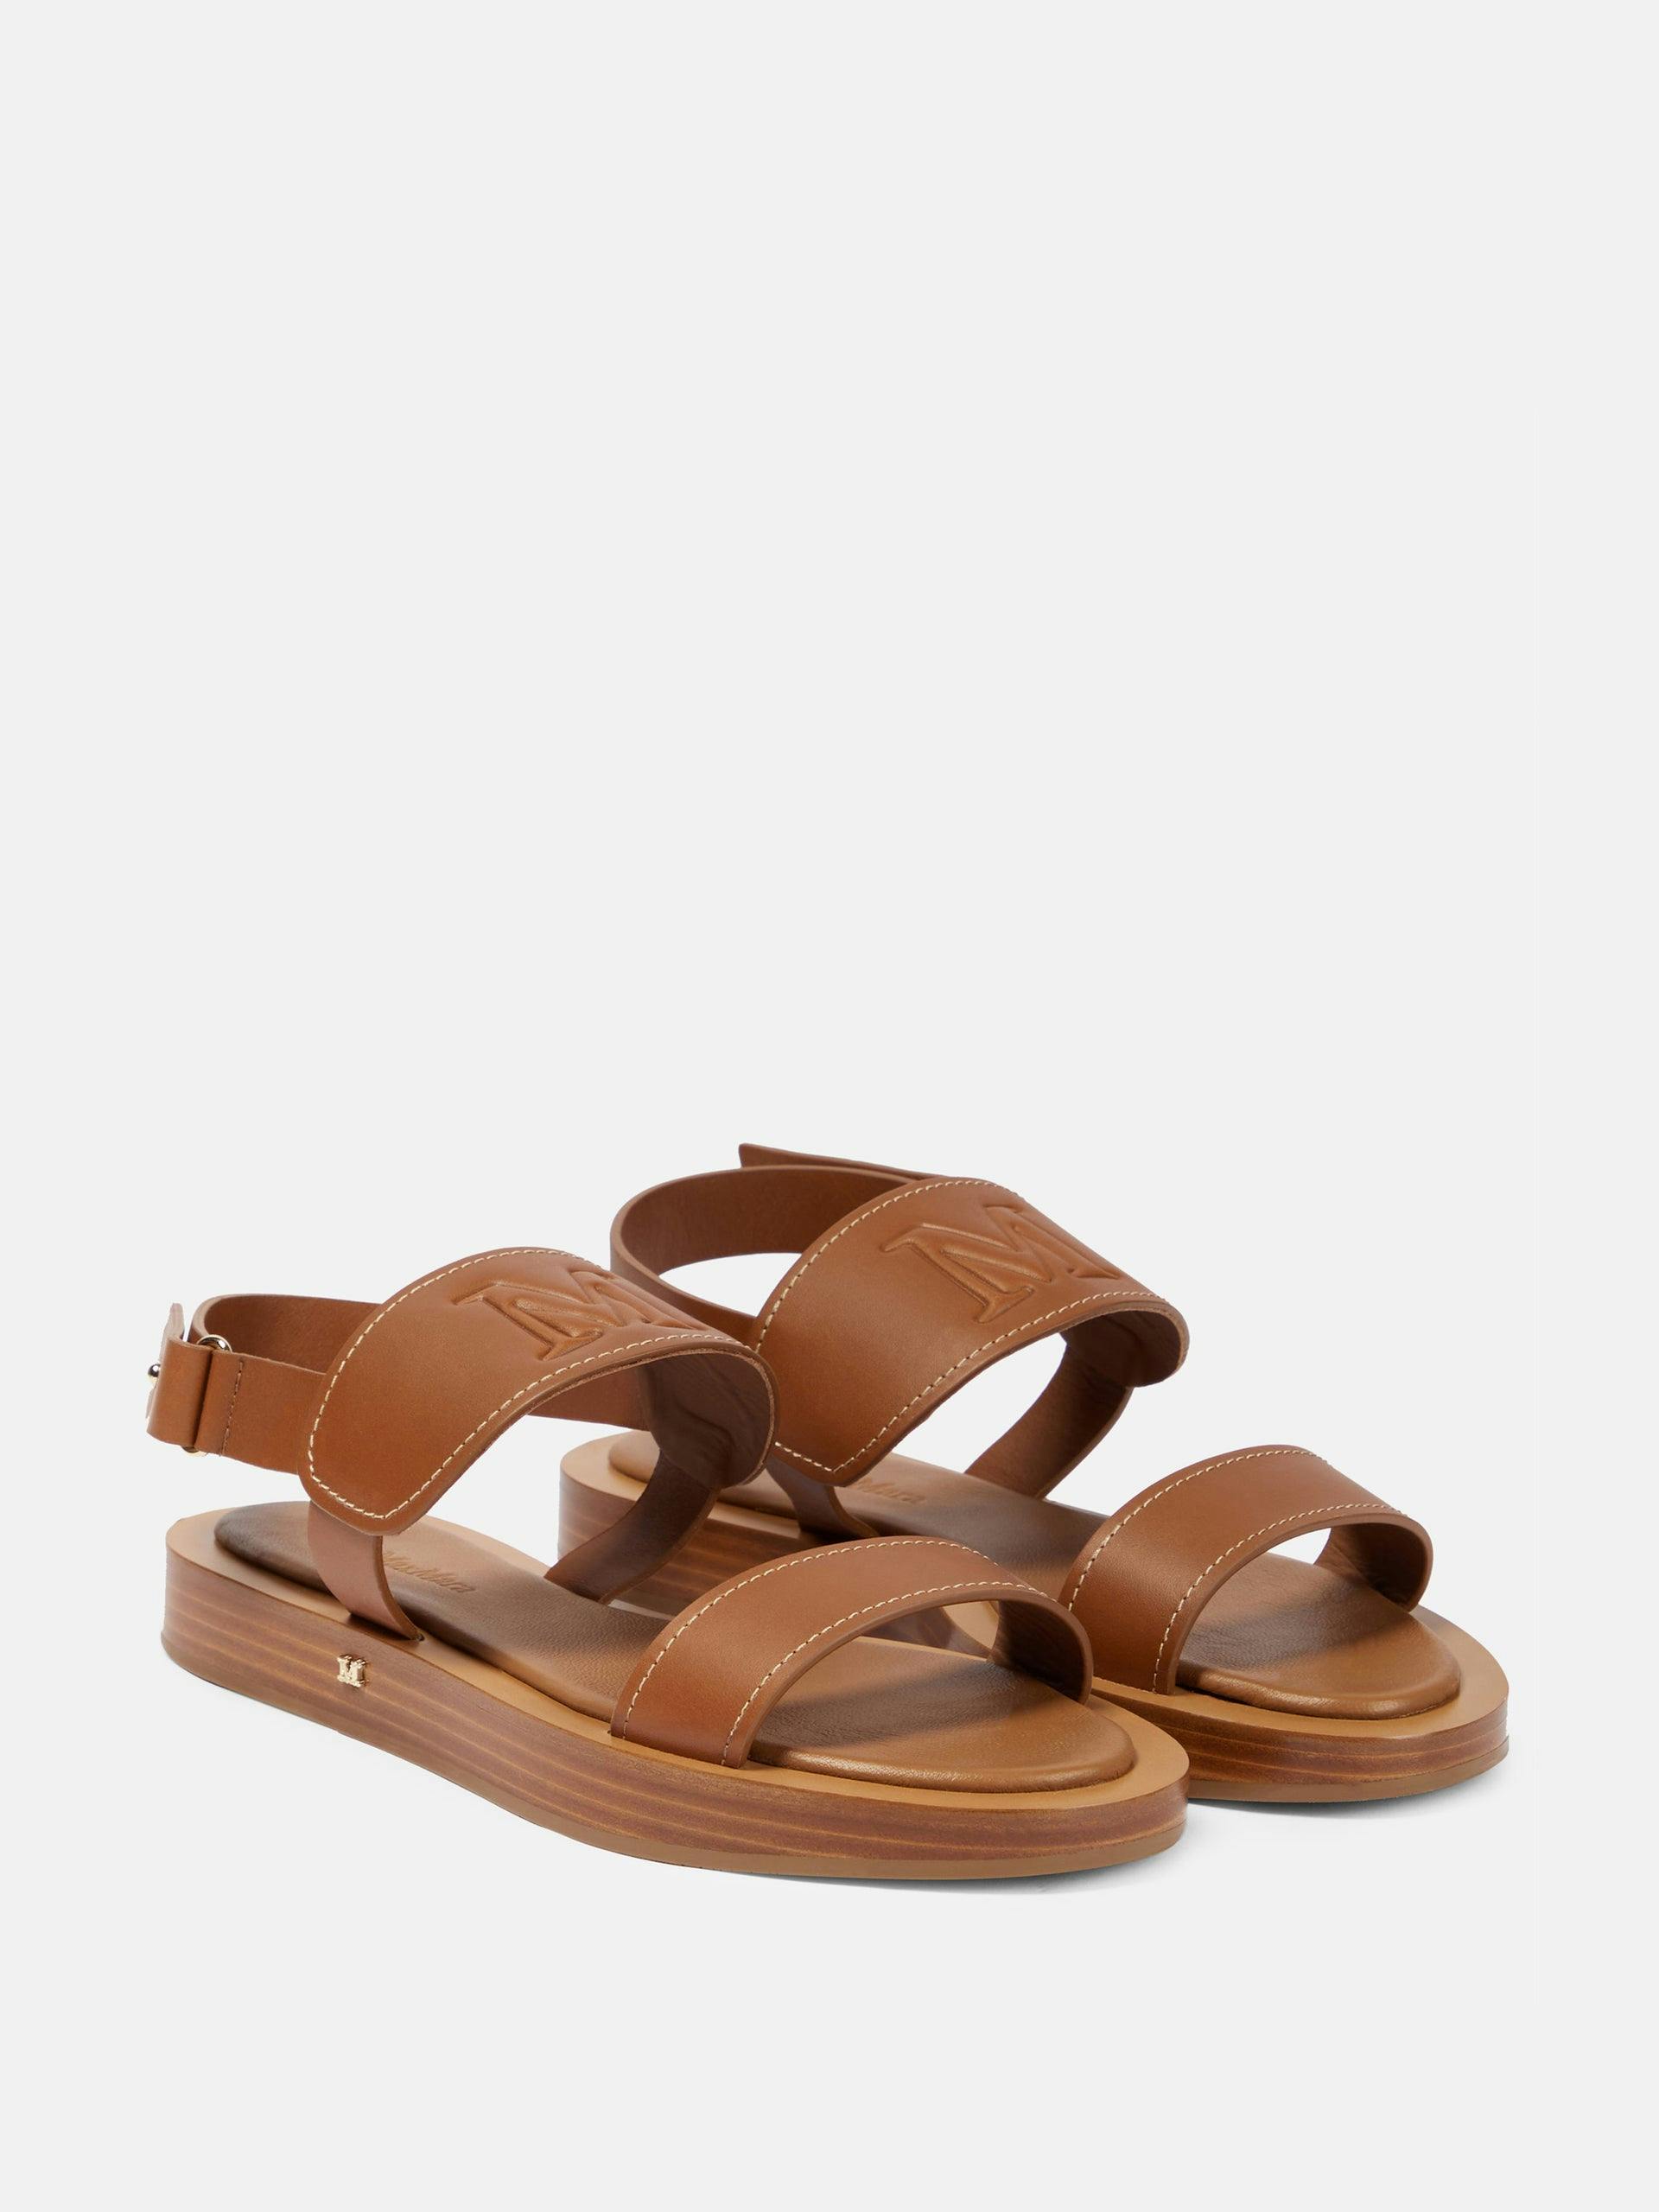 Flat tan leather sandals